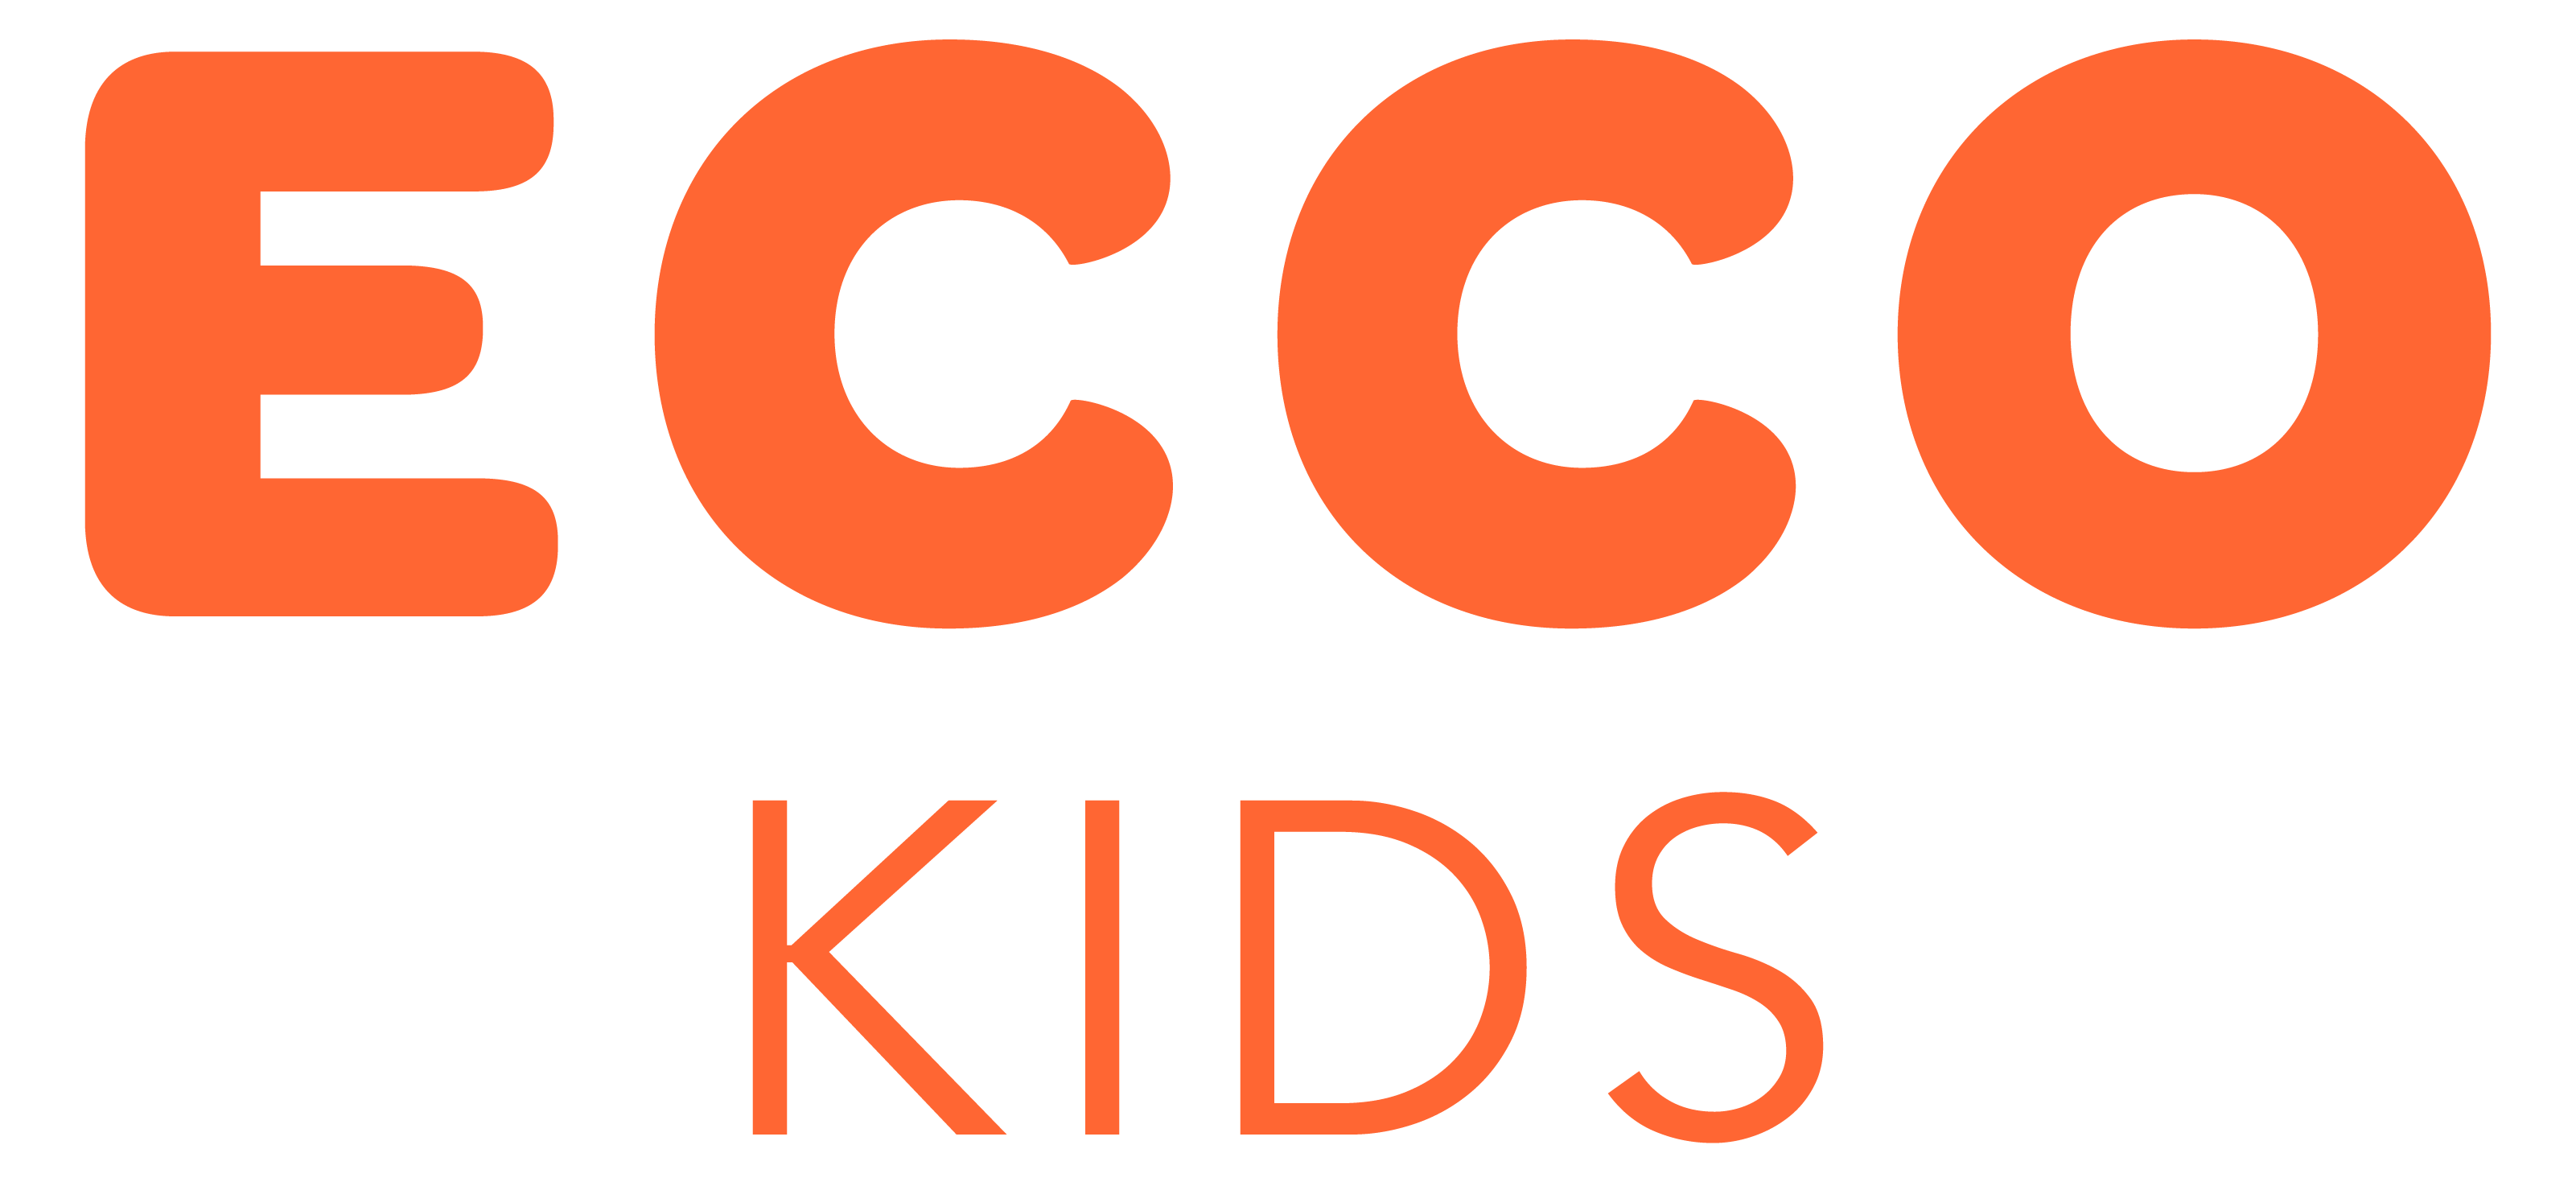 ECCO Kids - Engaging Childcare | Community Church